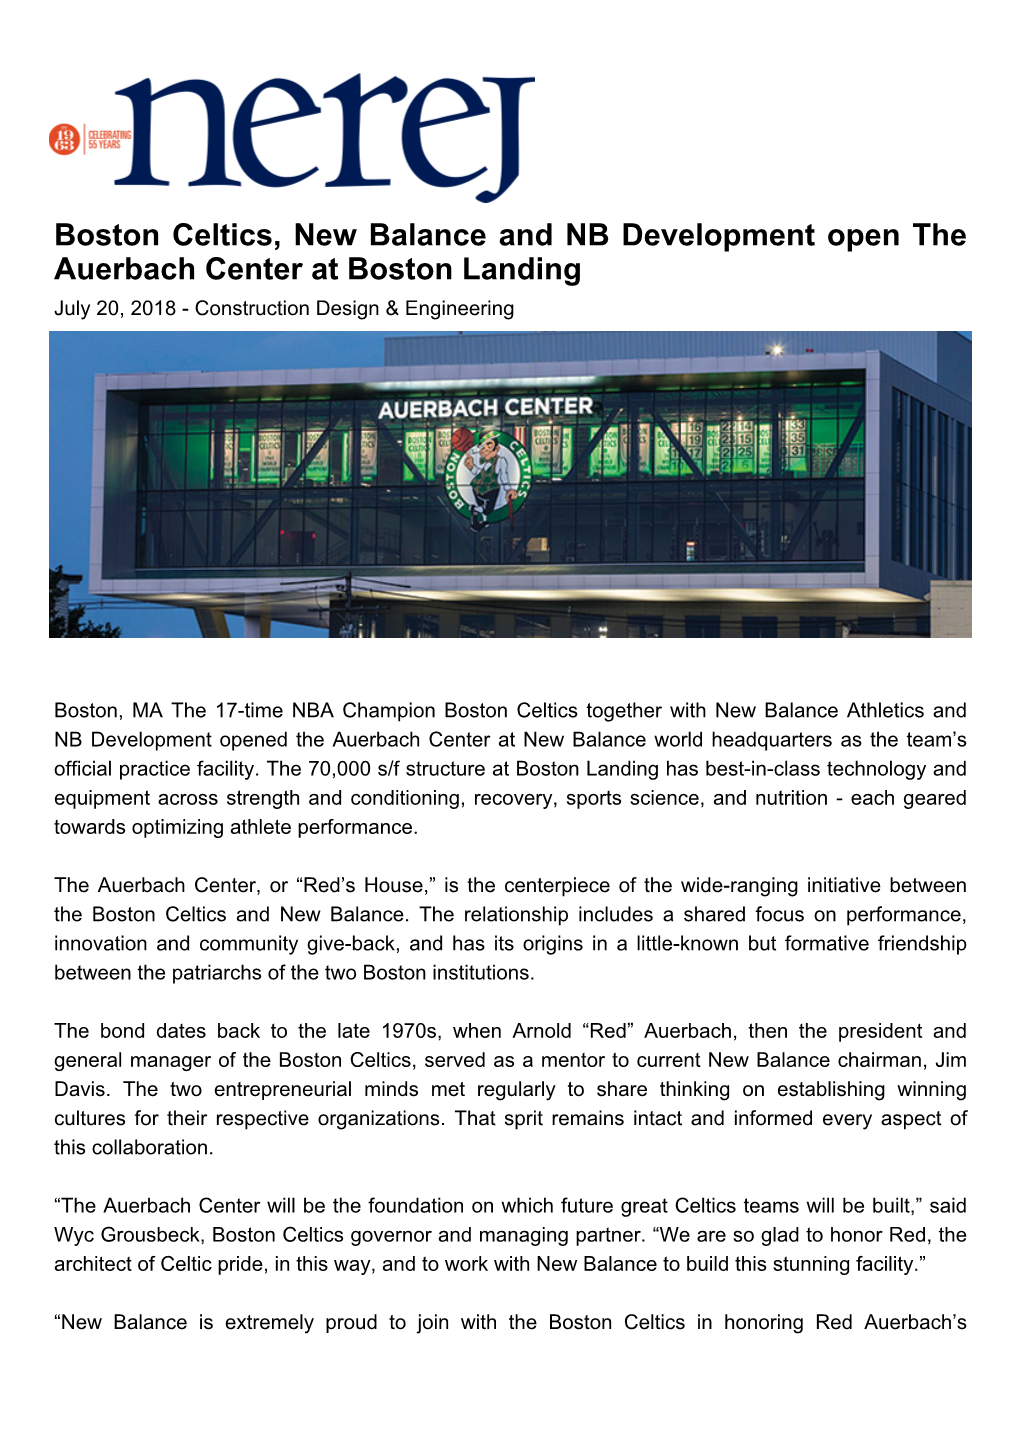 Boston Celtics, New Balance and NB Development Open the Auerbach Center at Boston Landing July 20, 2018 - Construction Design & Engineering